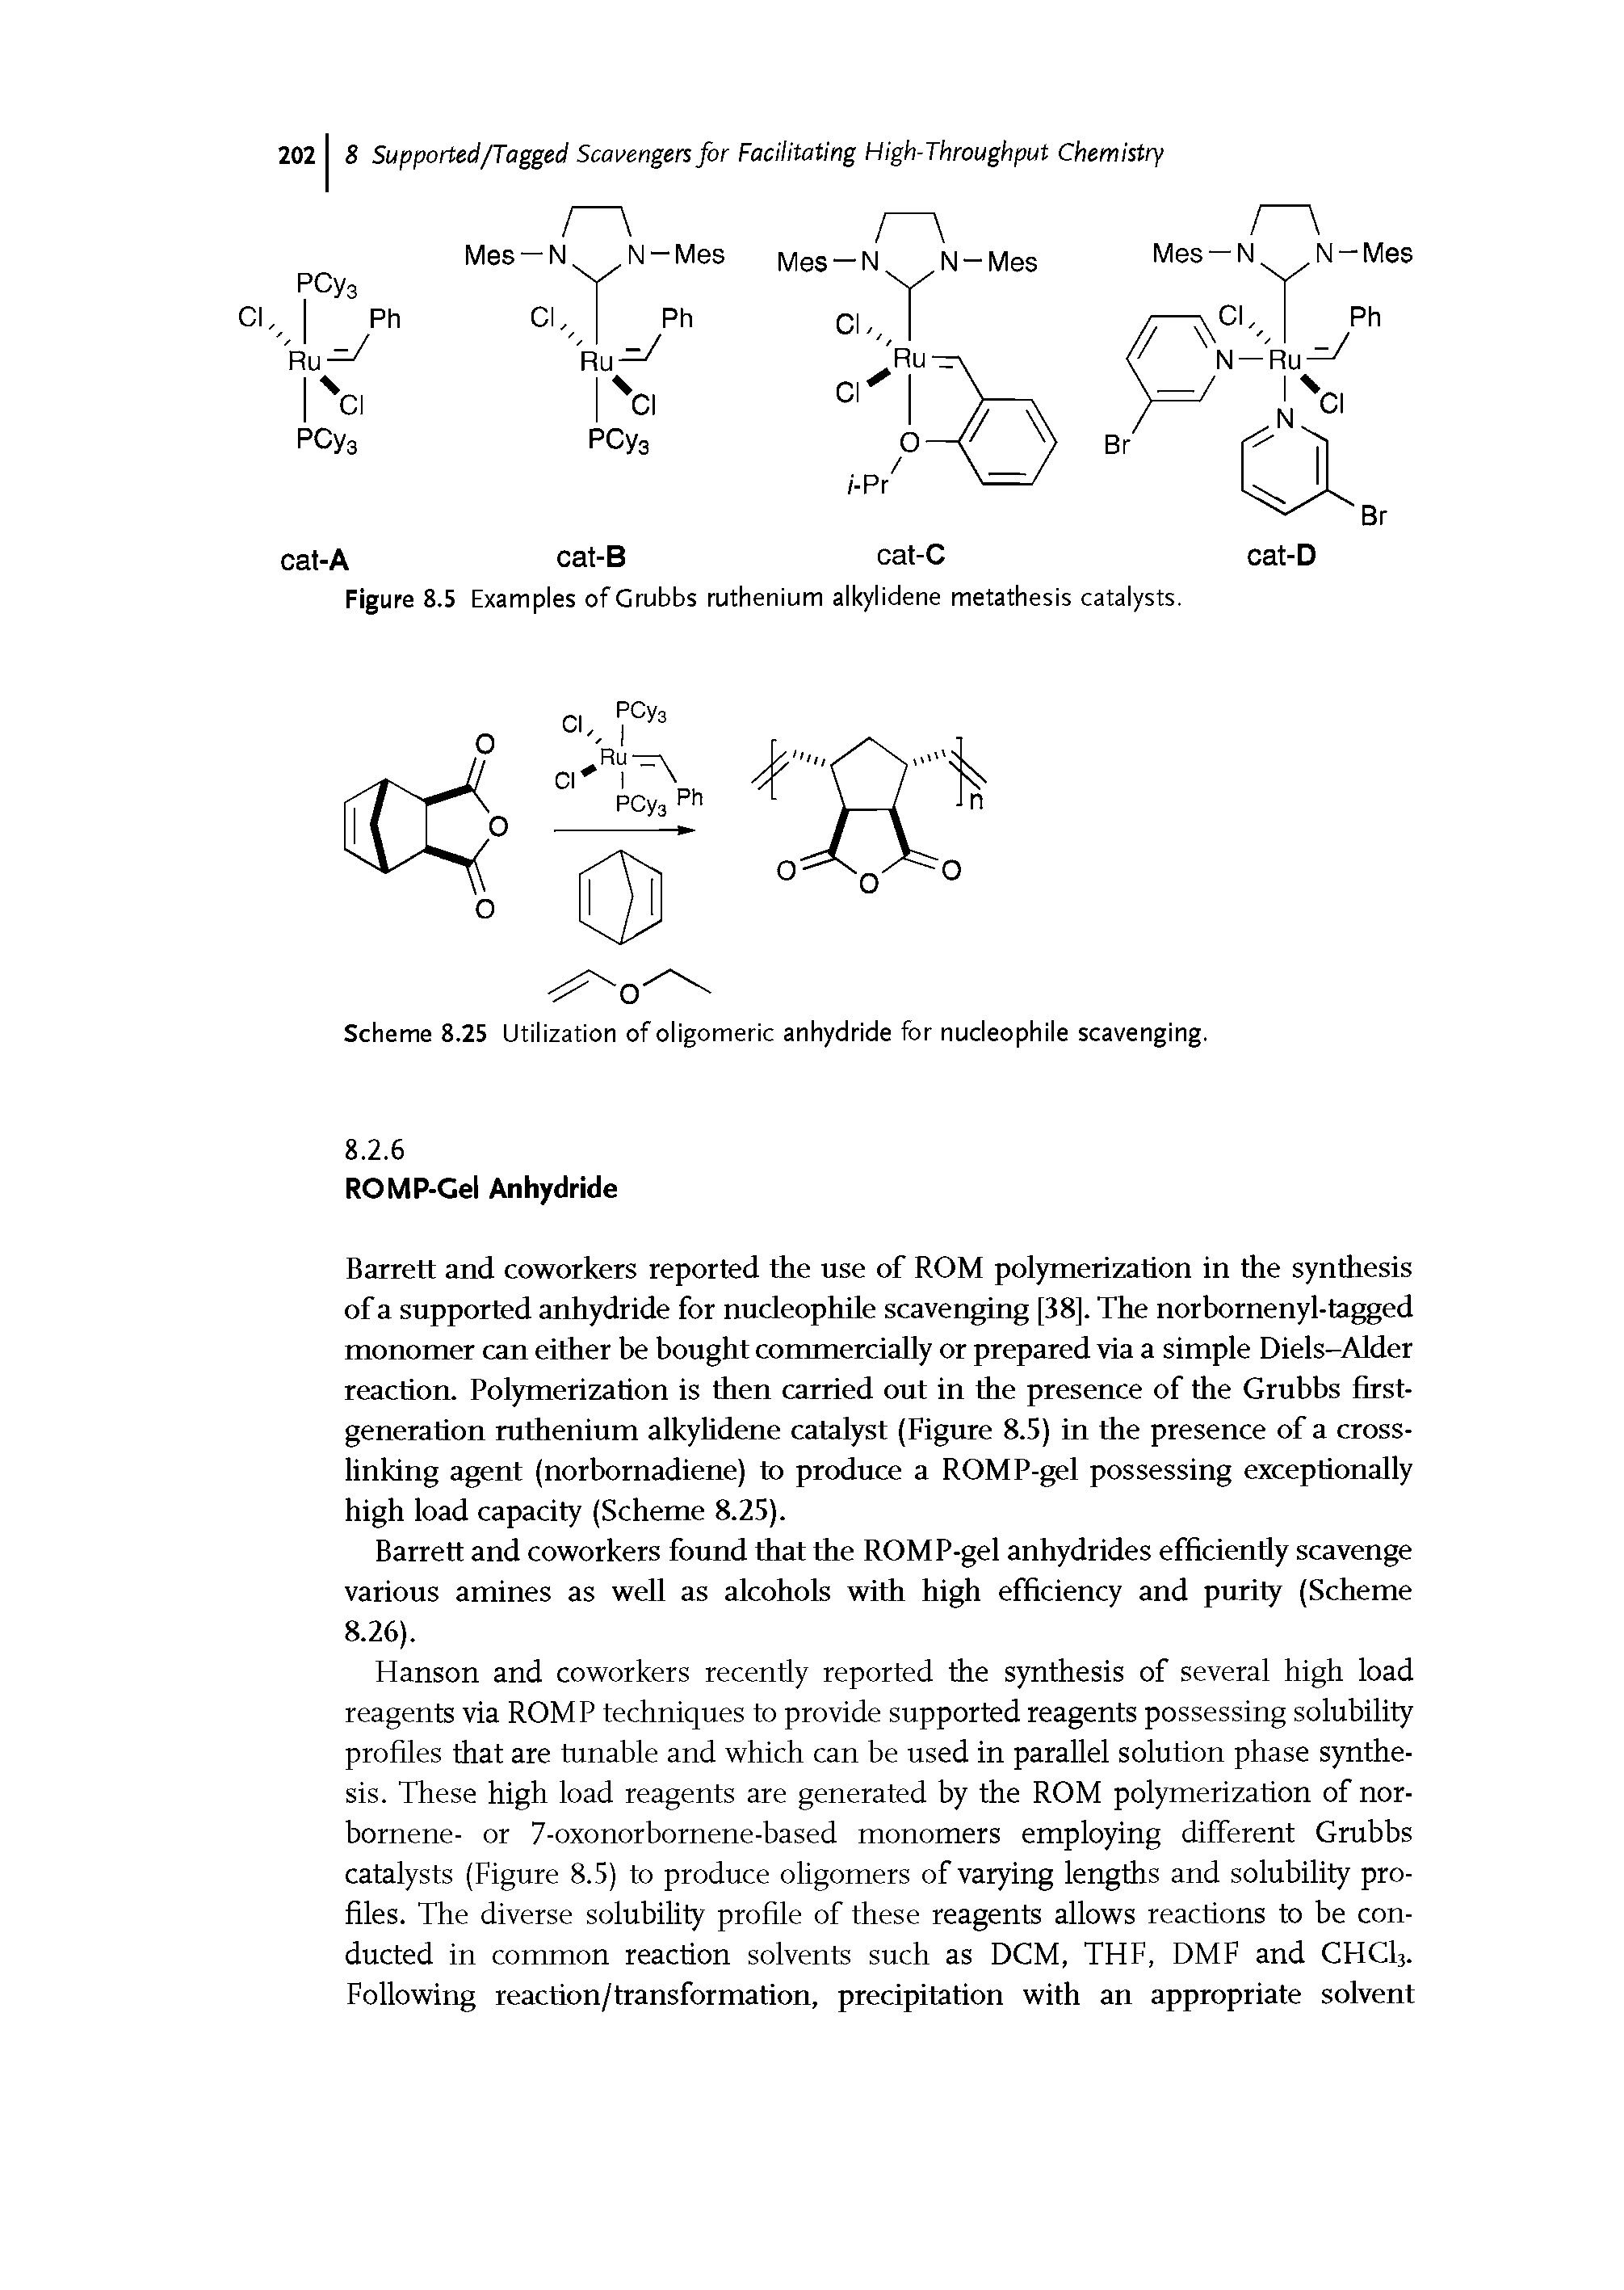 Figure 8.5 Examples of Grubbs ruthenium alkylidene metathesis...